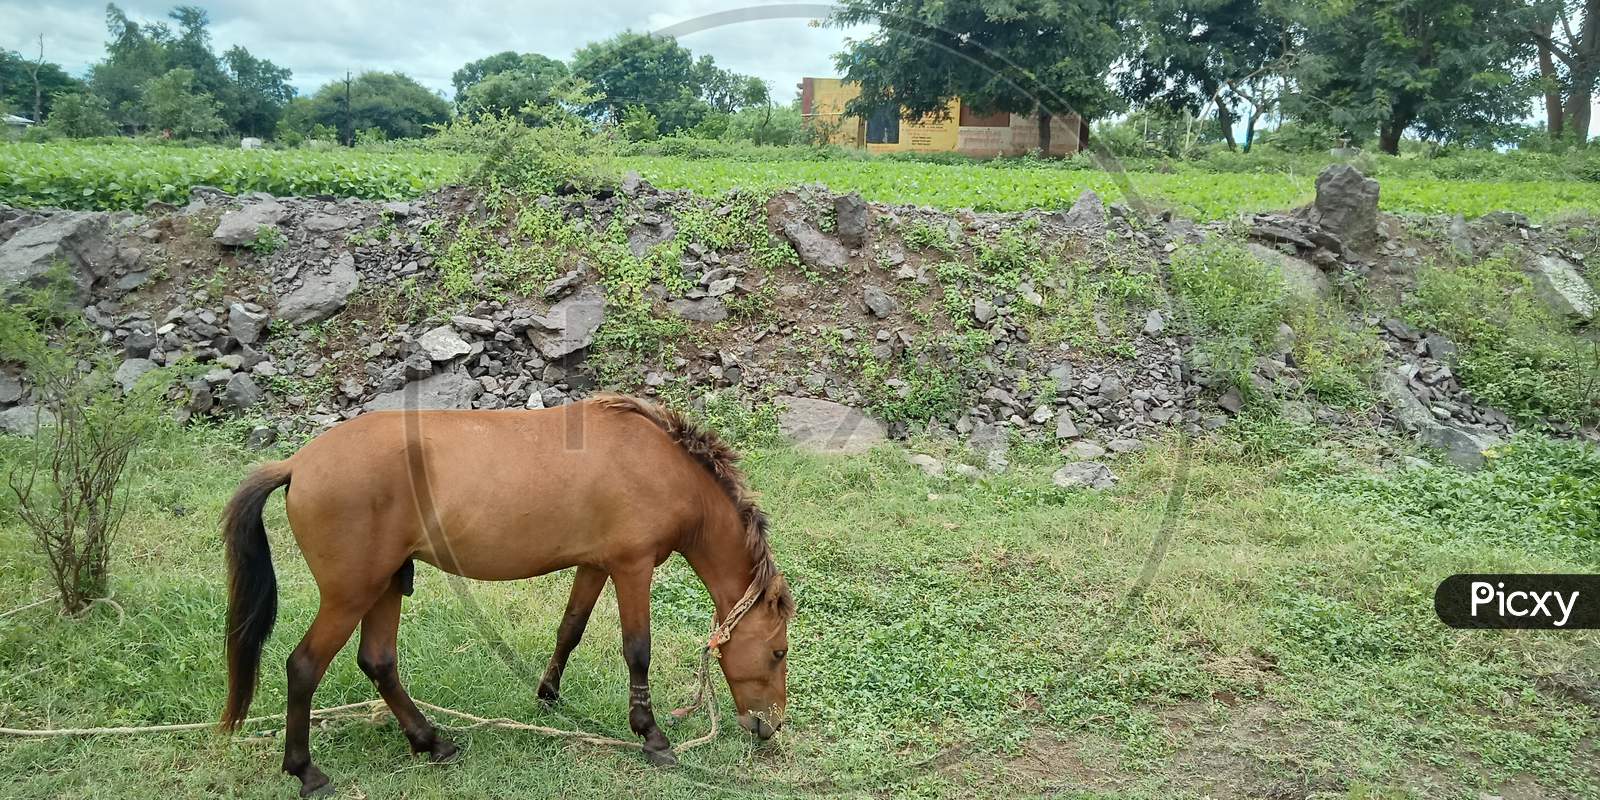 A brown horse eating green grass